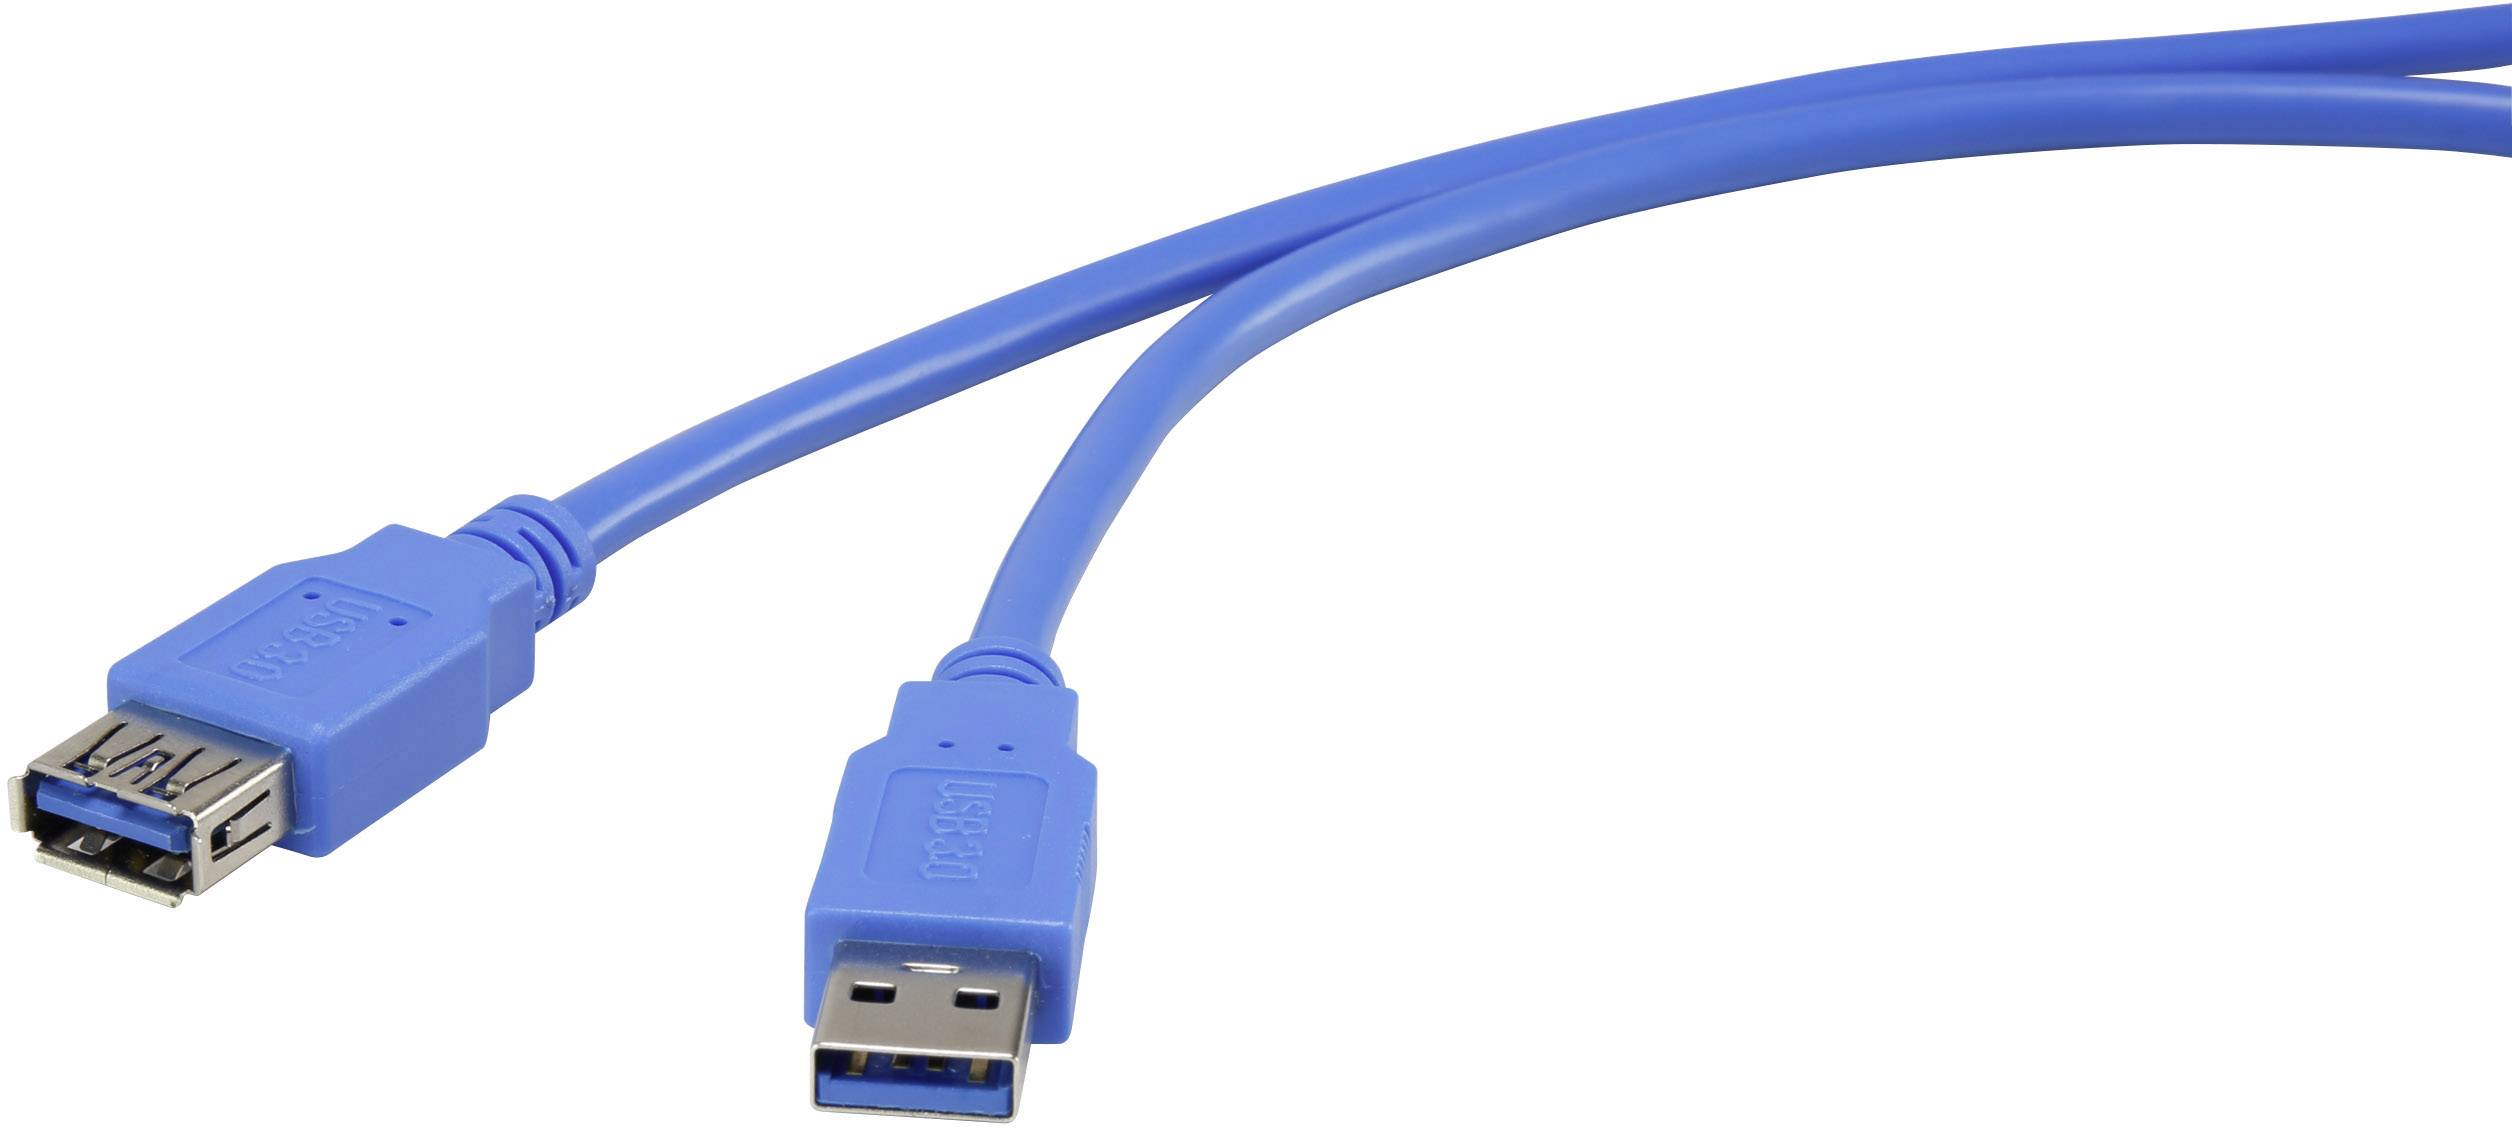 CONRAD Renkforce USB 3.0 Verlängerungskabel [1x USB 3.0 Stecker A - 1x USB 3.0 Buchse A] 1.8 m Blau